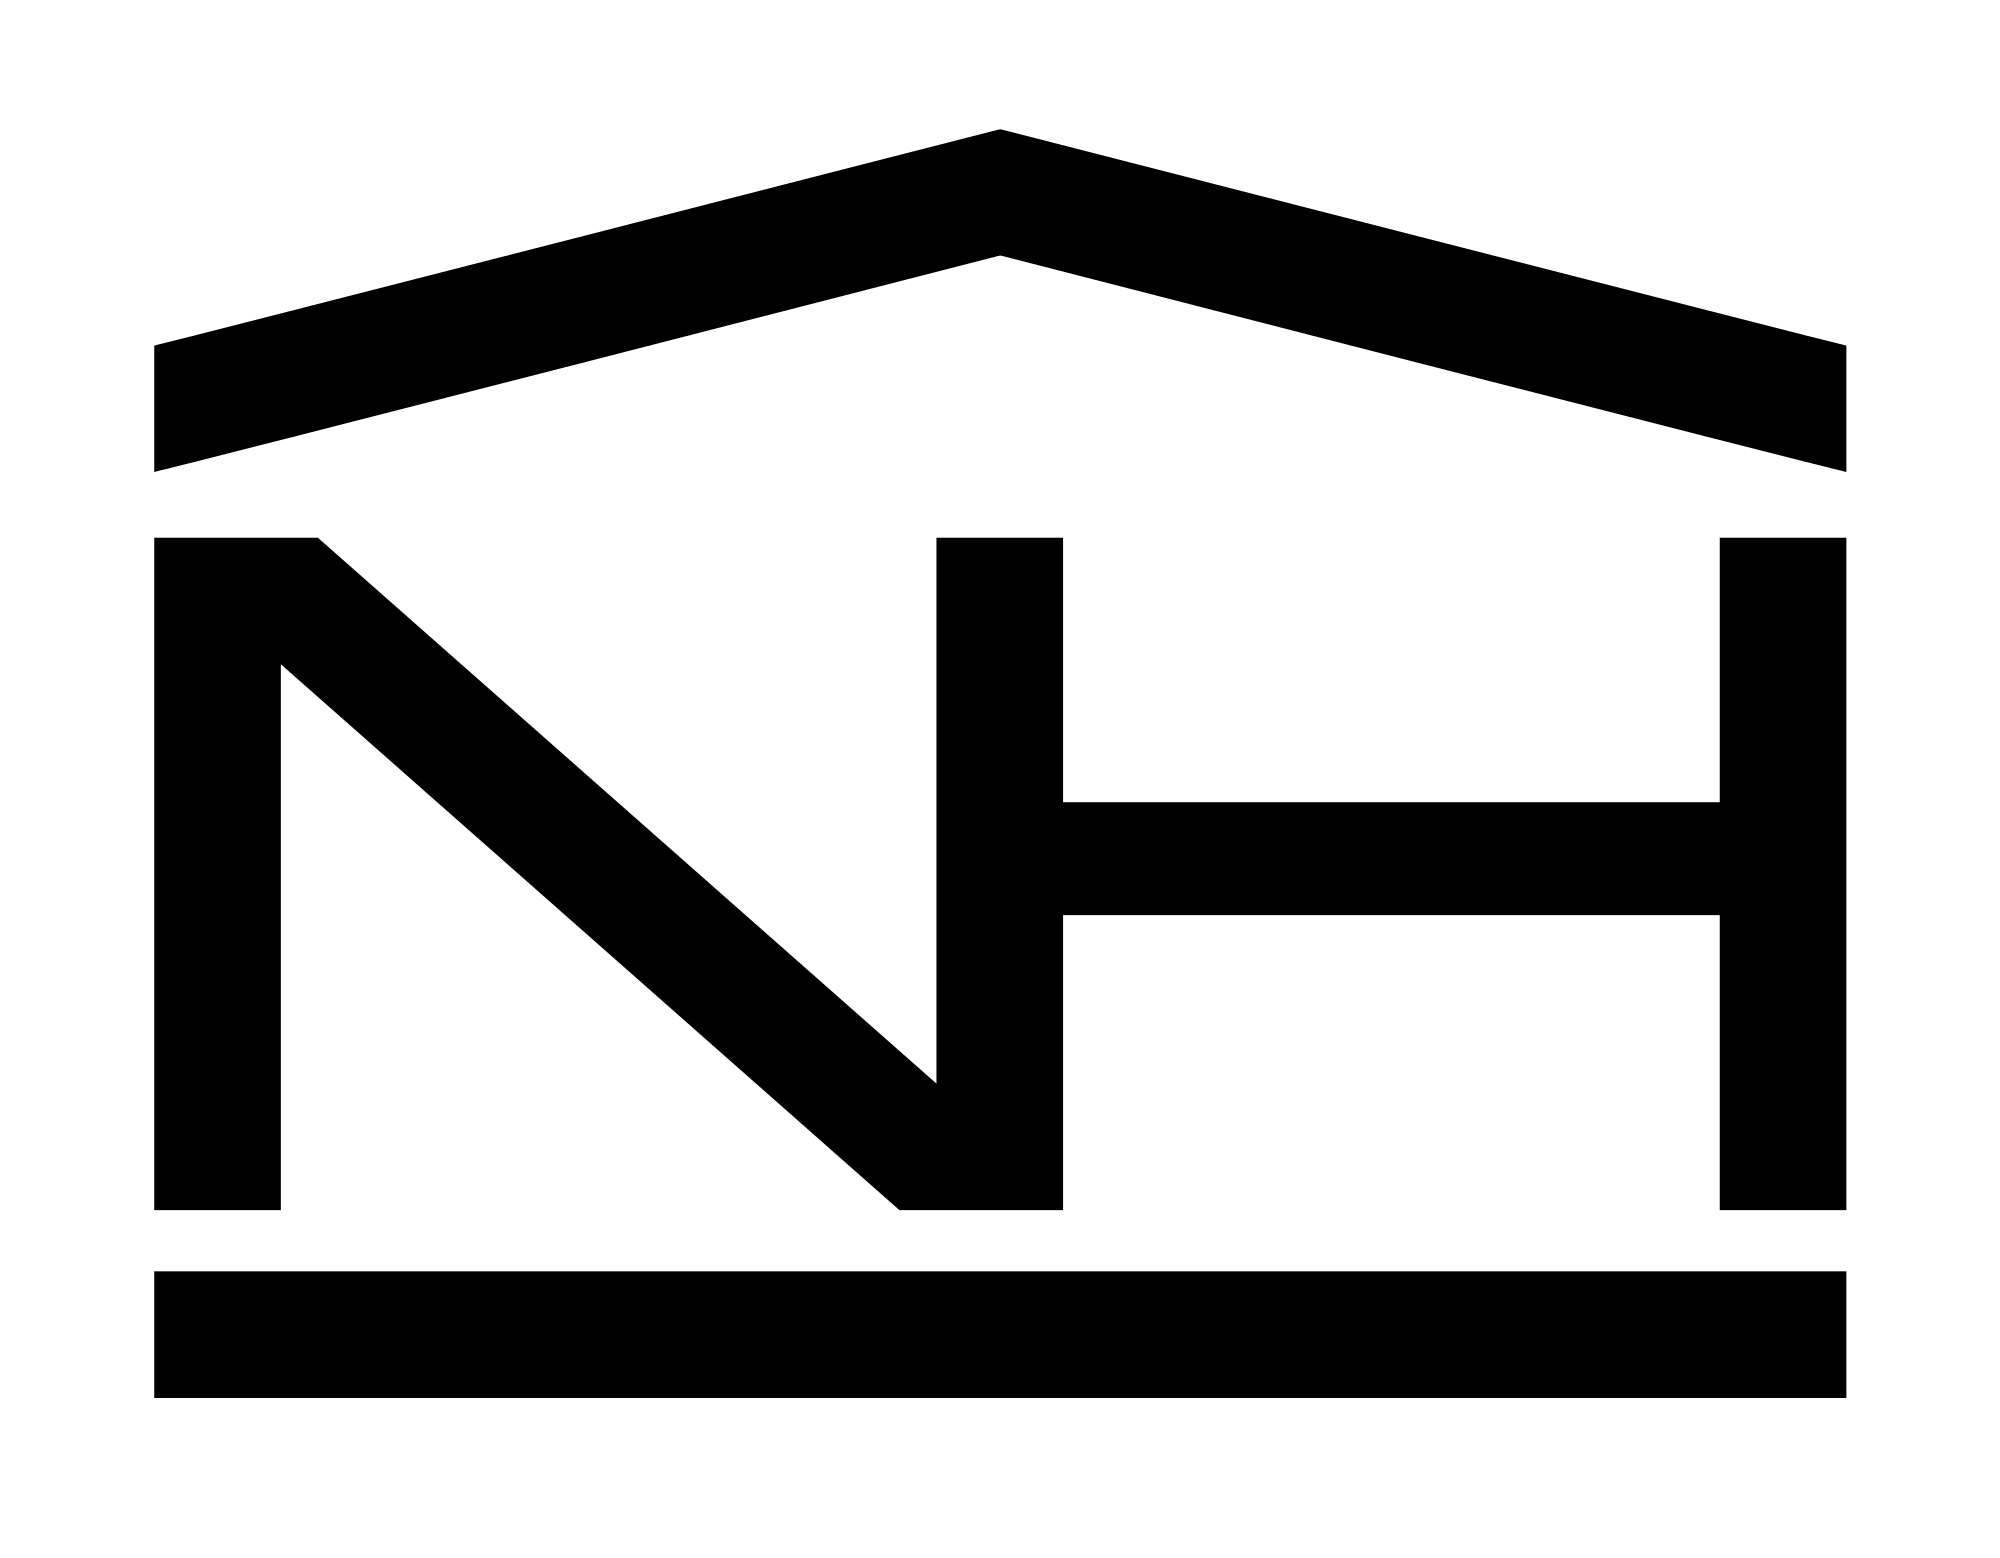 NH Logo - File:Nh logo.svg - Wikimedia Commons